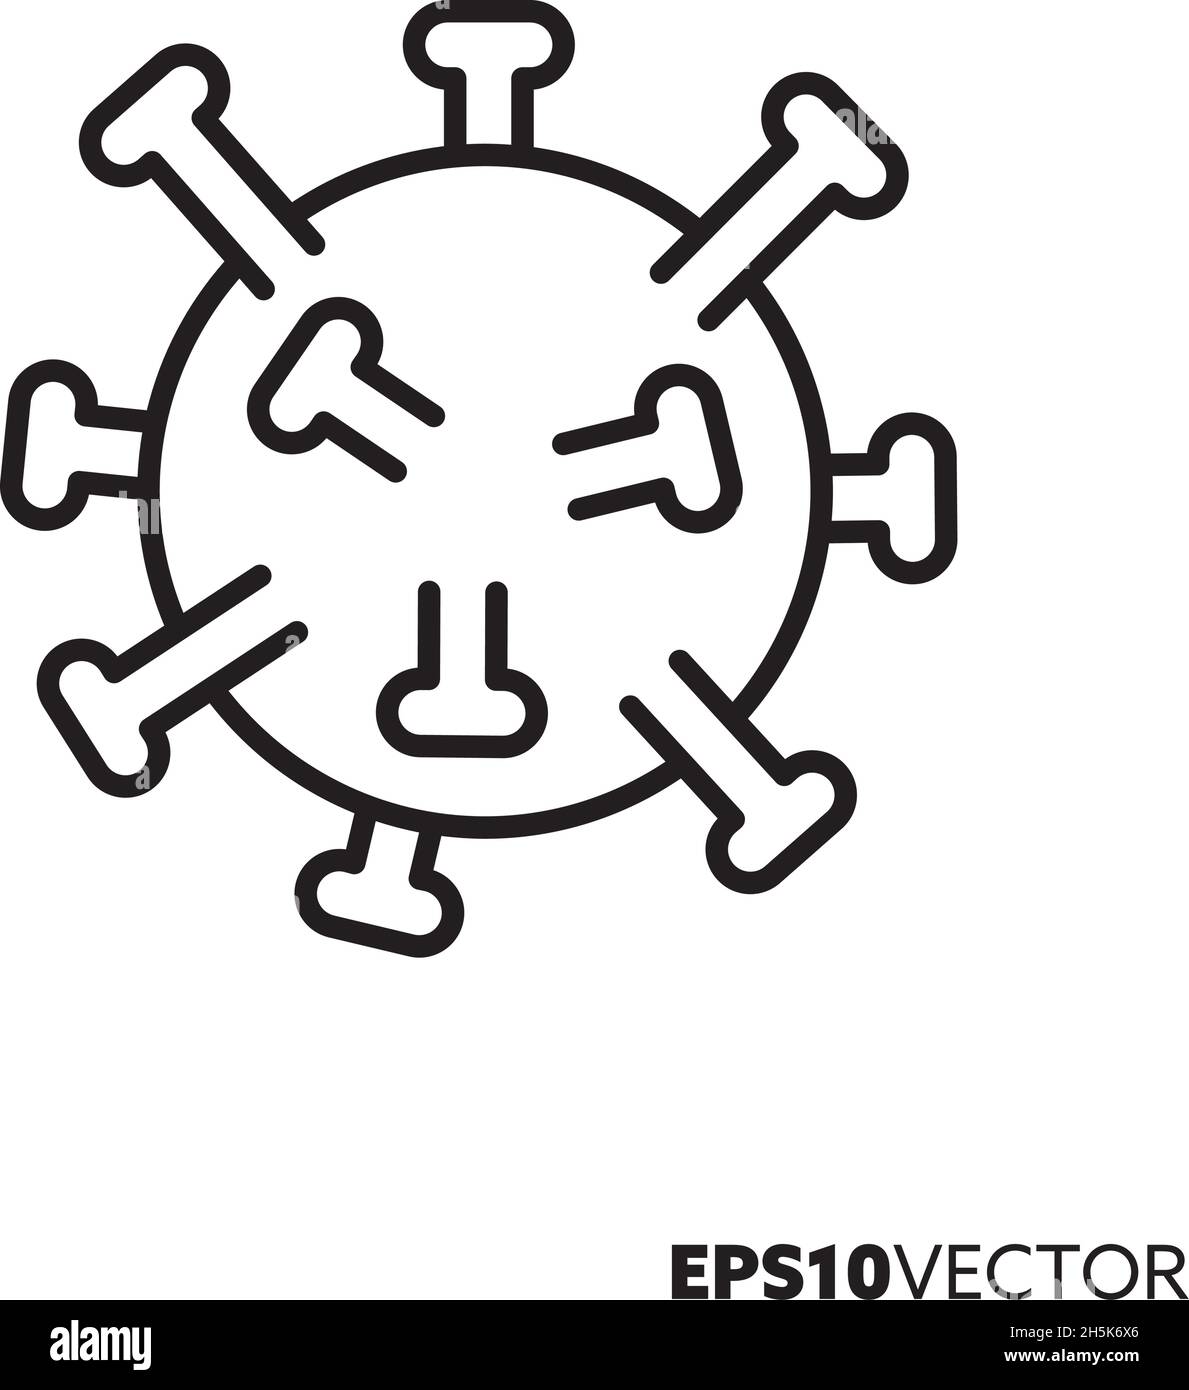 Corona virus line icon. Outline symbol of Covid-19 pathogen. Pandemic and illness concept flat vector illustration. Stock Vector